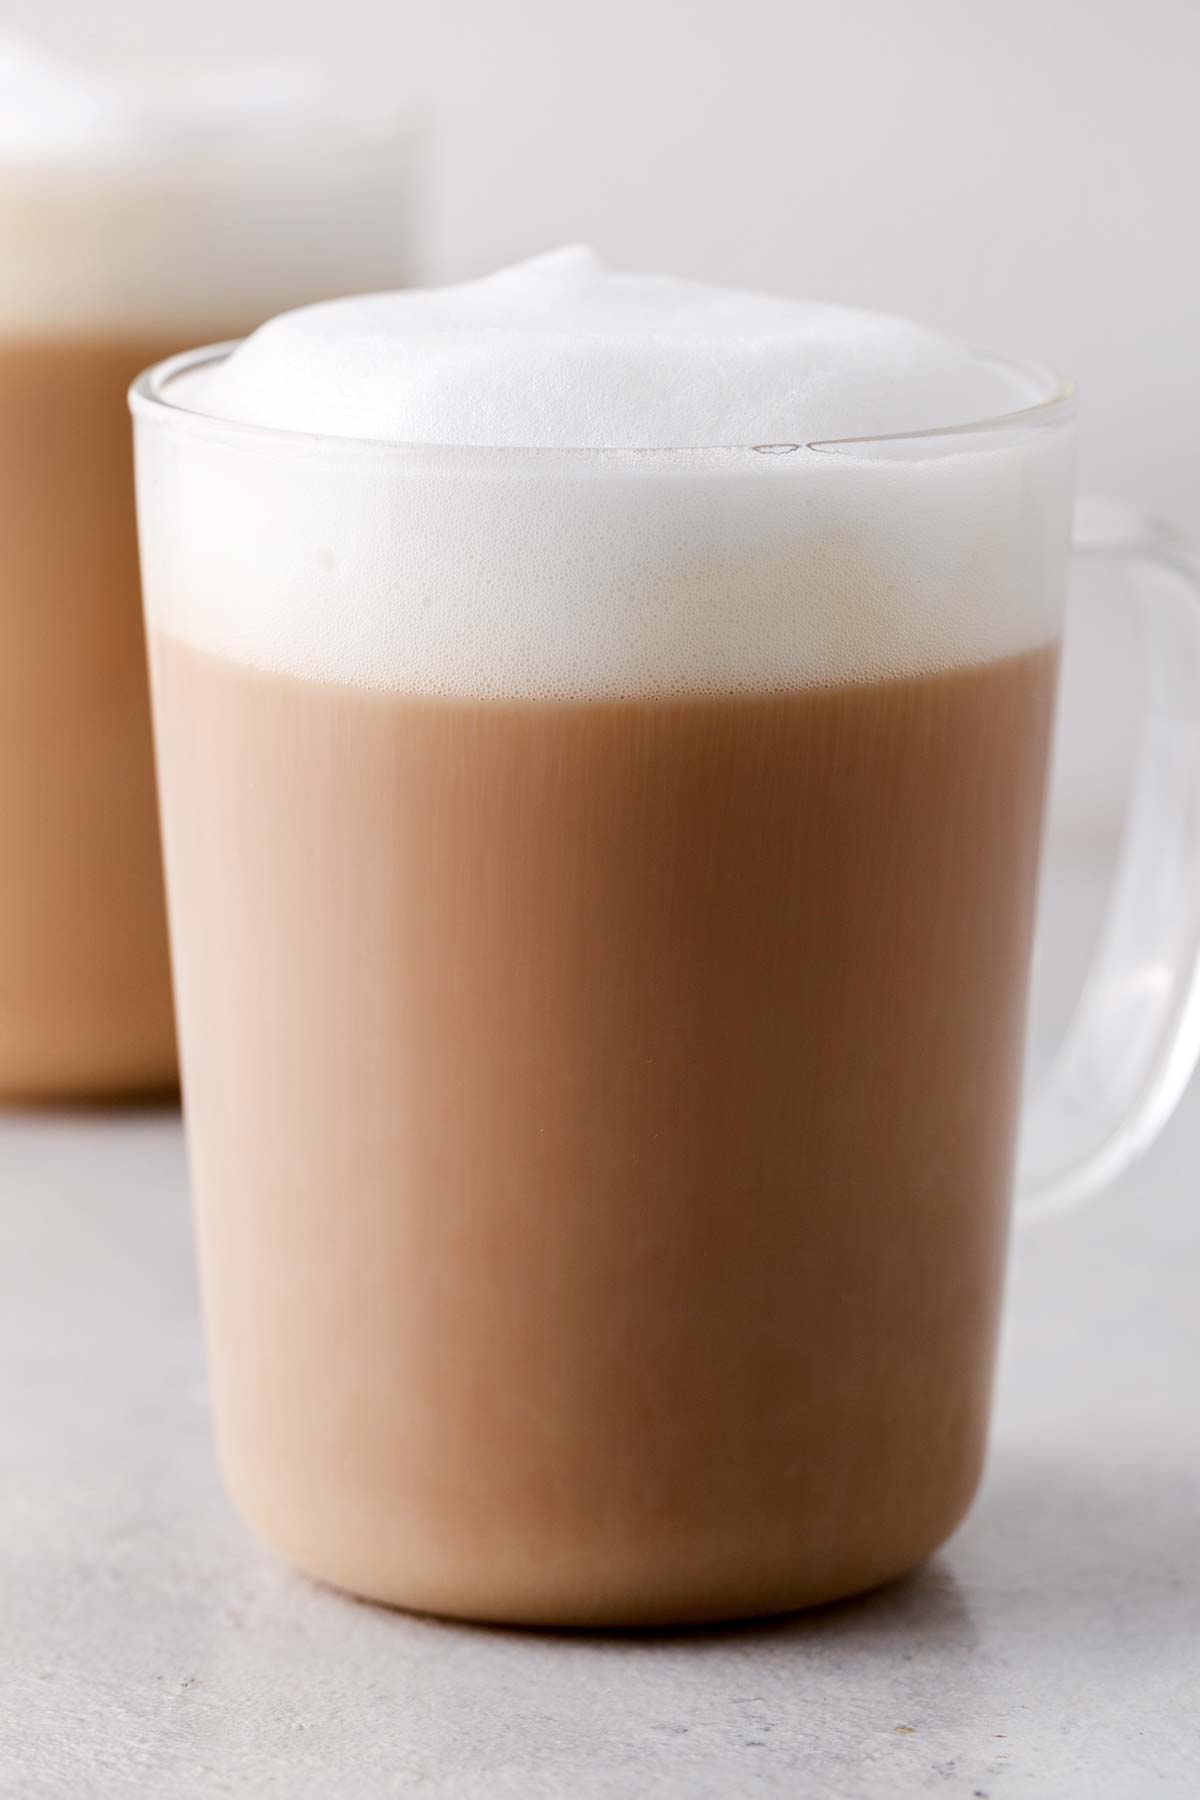 Starbucks Royal English Breakfast Tea Latte Copycat drink in a glass mug.